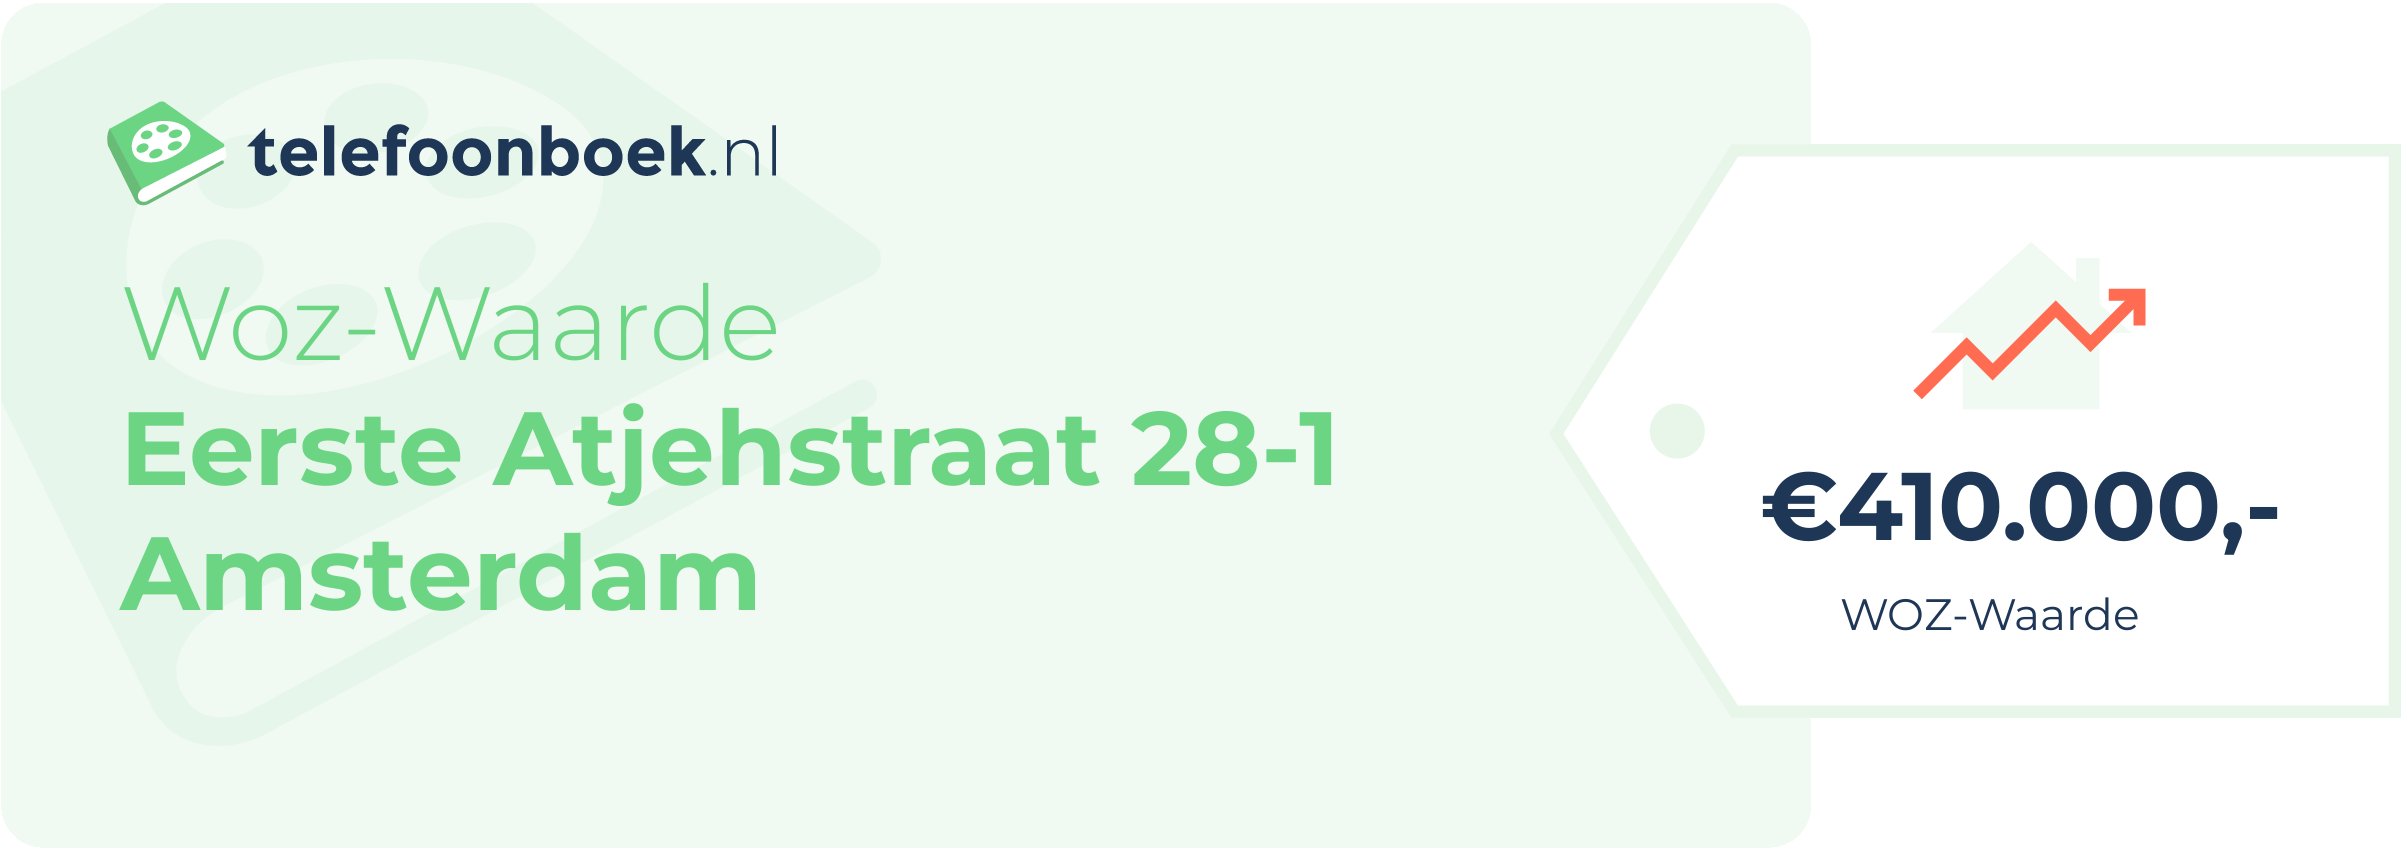 WOZ-waarde Eerste Atjehstraat 28-1 Amsterdam